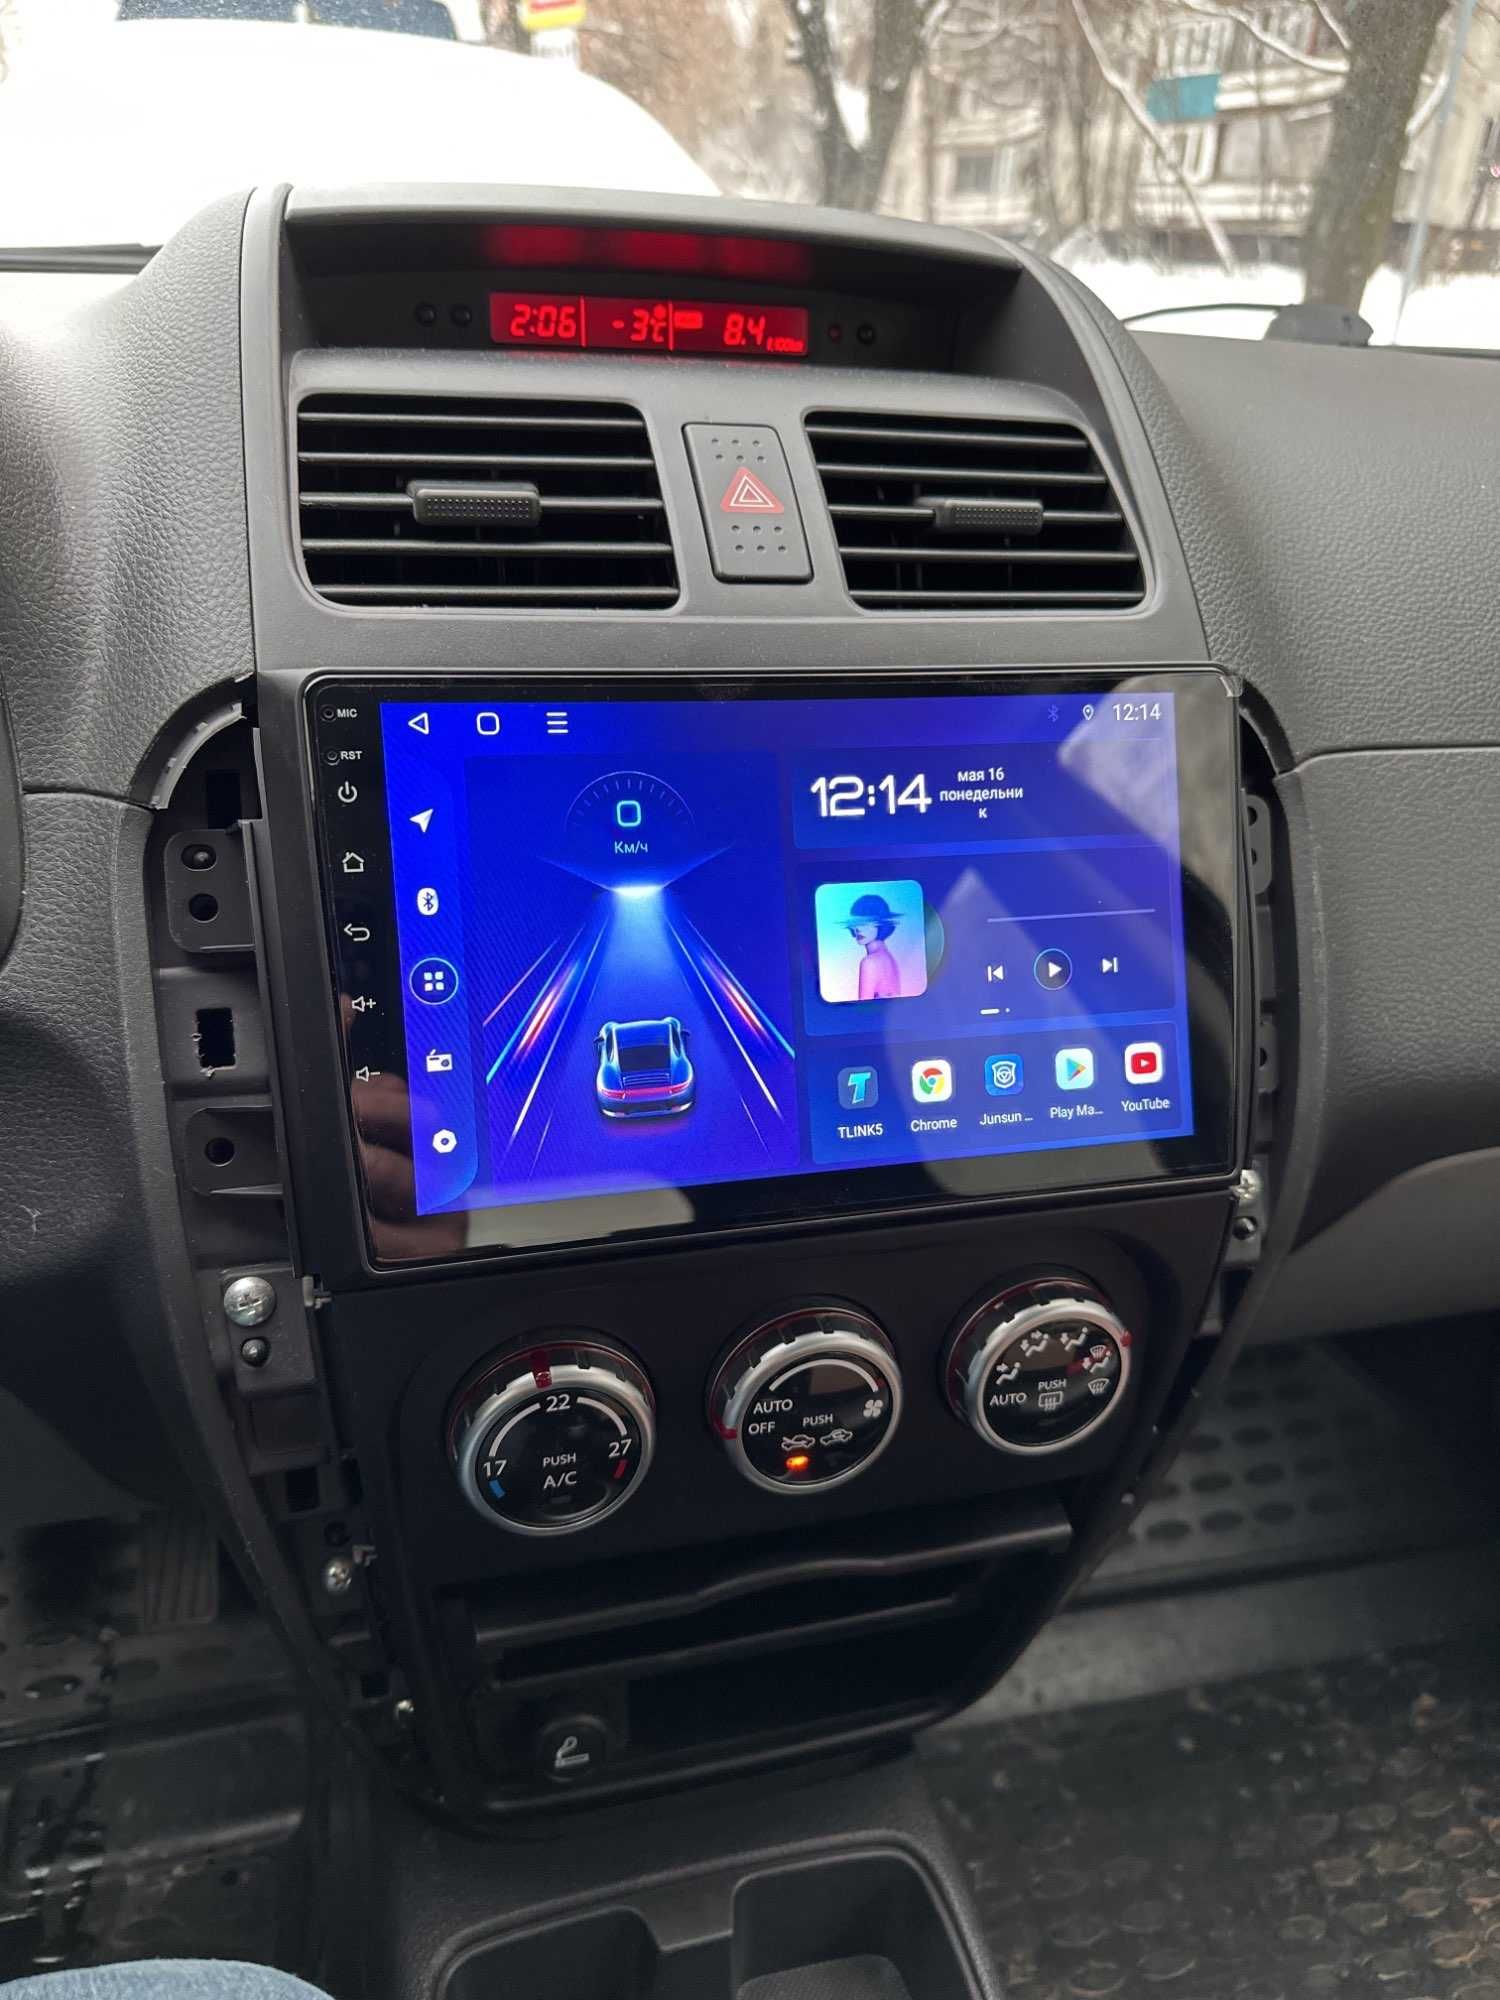 Suzuki SX4 2006 - 2014 radio tablet navi android gps